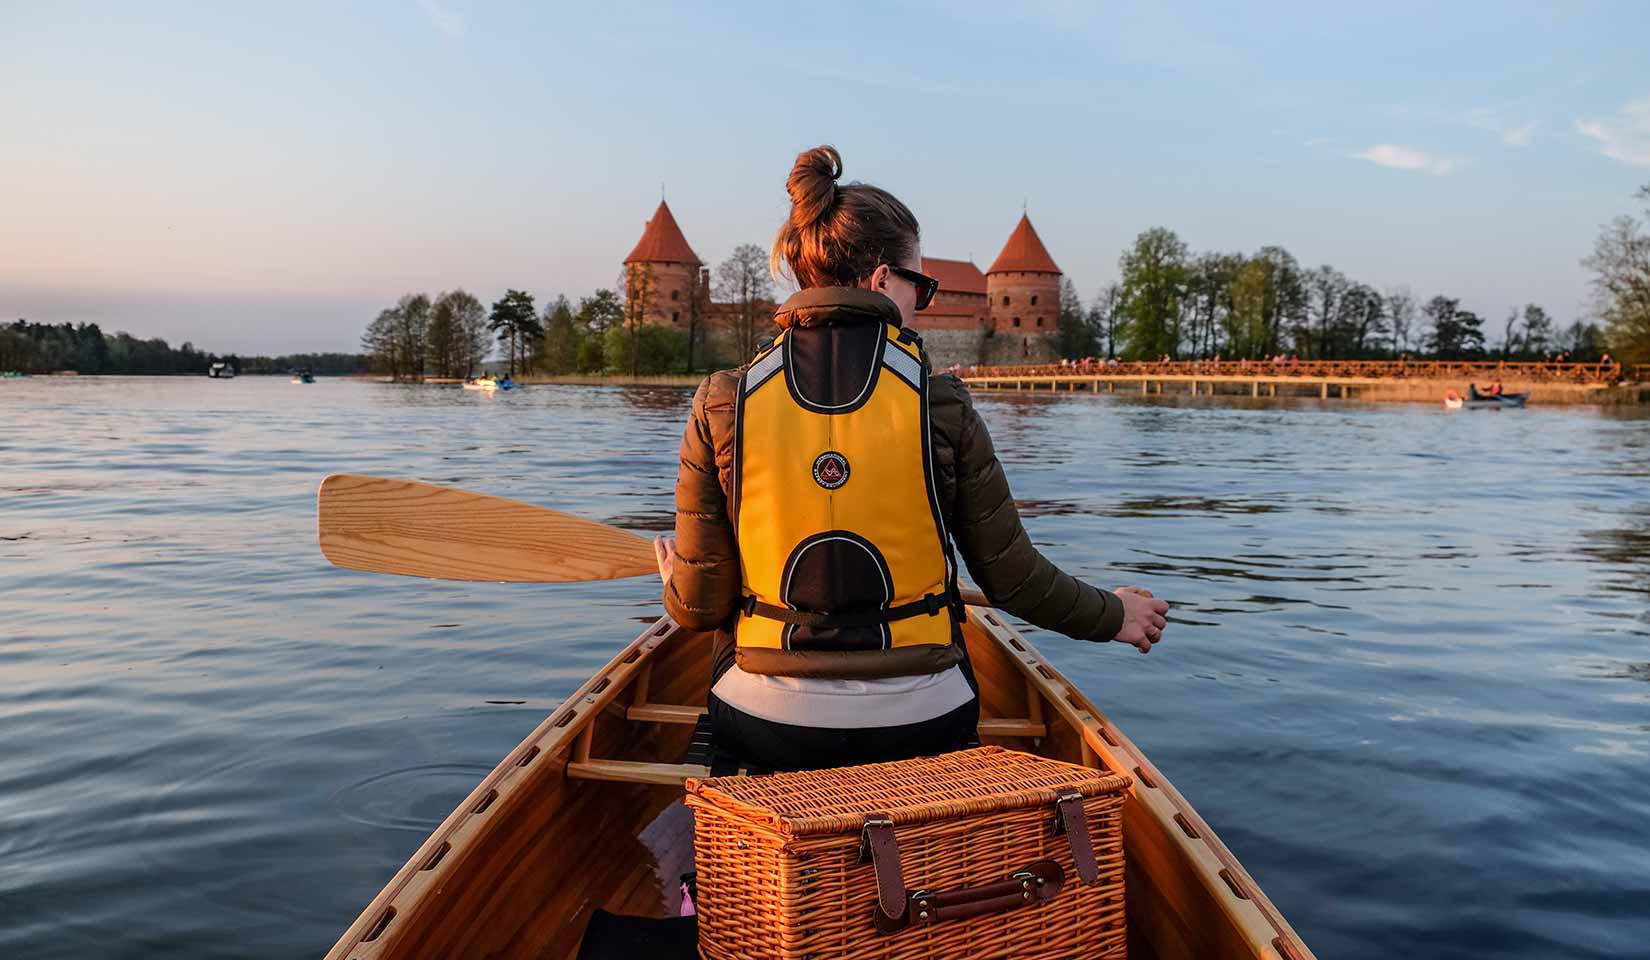 Canoe and Trakai Castle